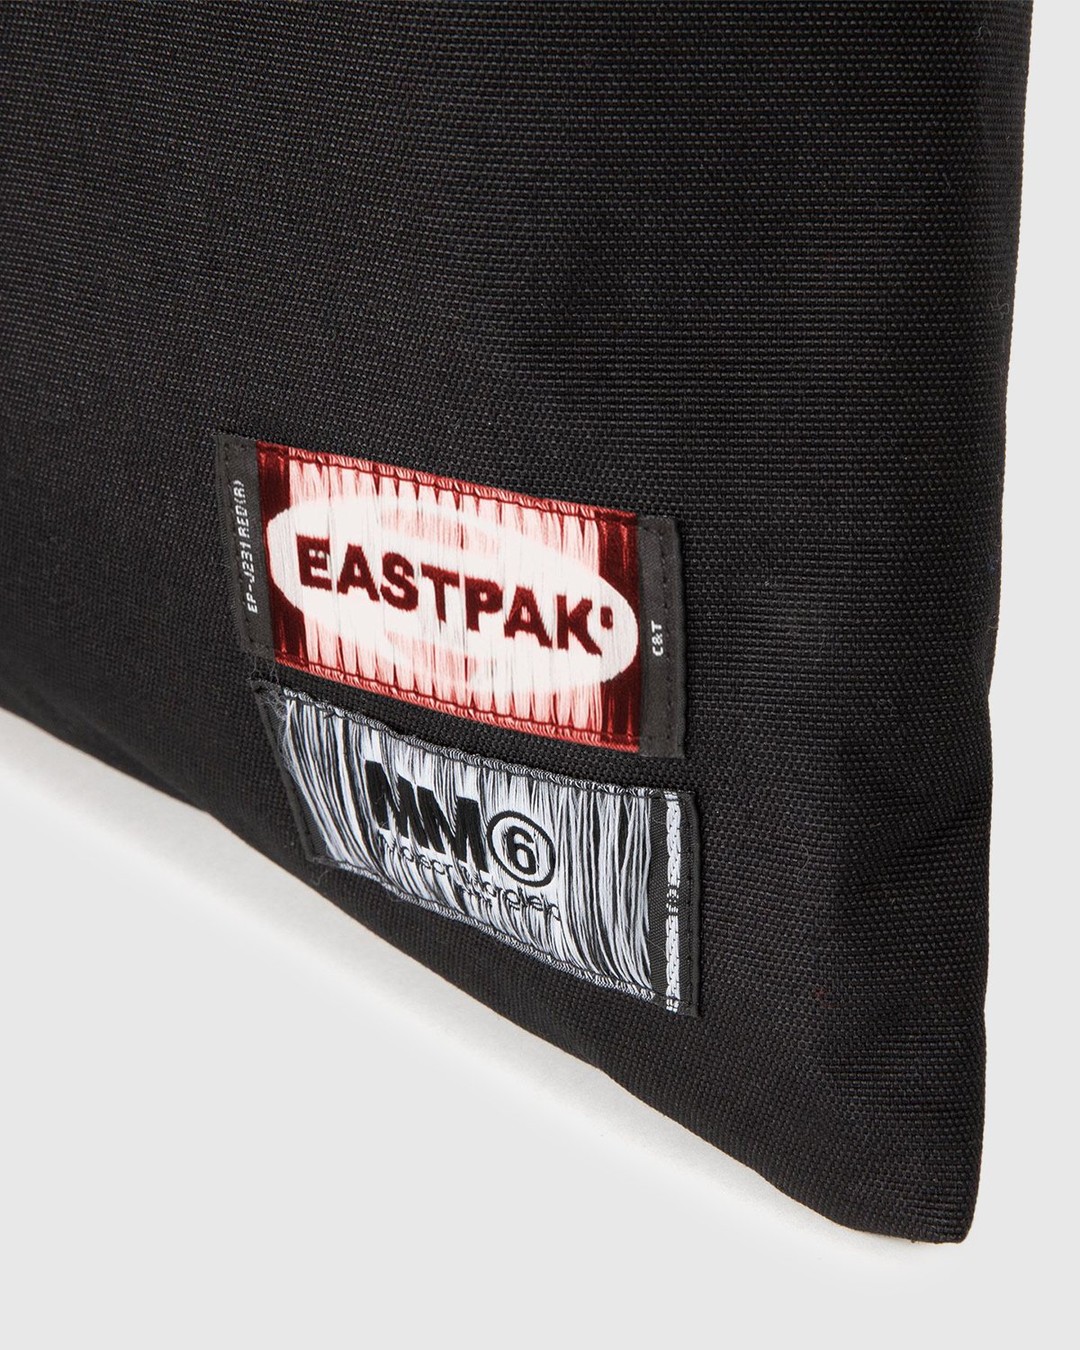 MM6 Maison Margiela x Eastpak – Shopping Bag Black - Bags - Black - Image 2